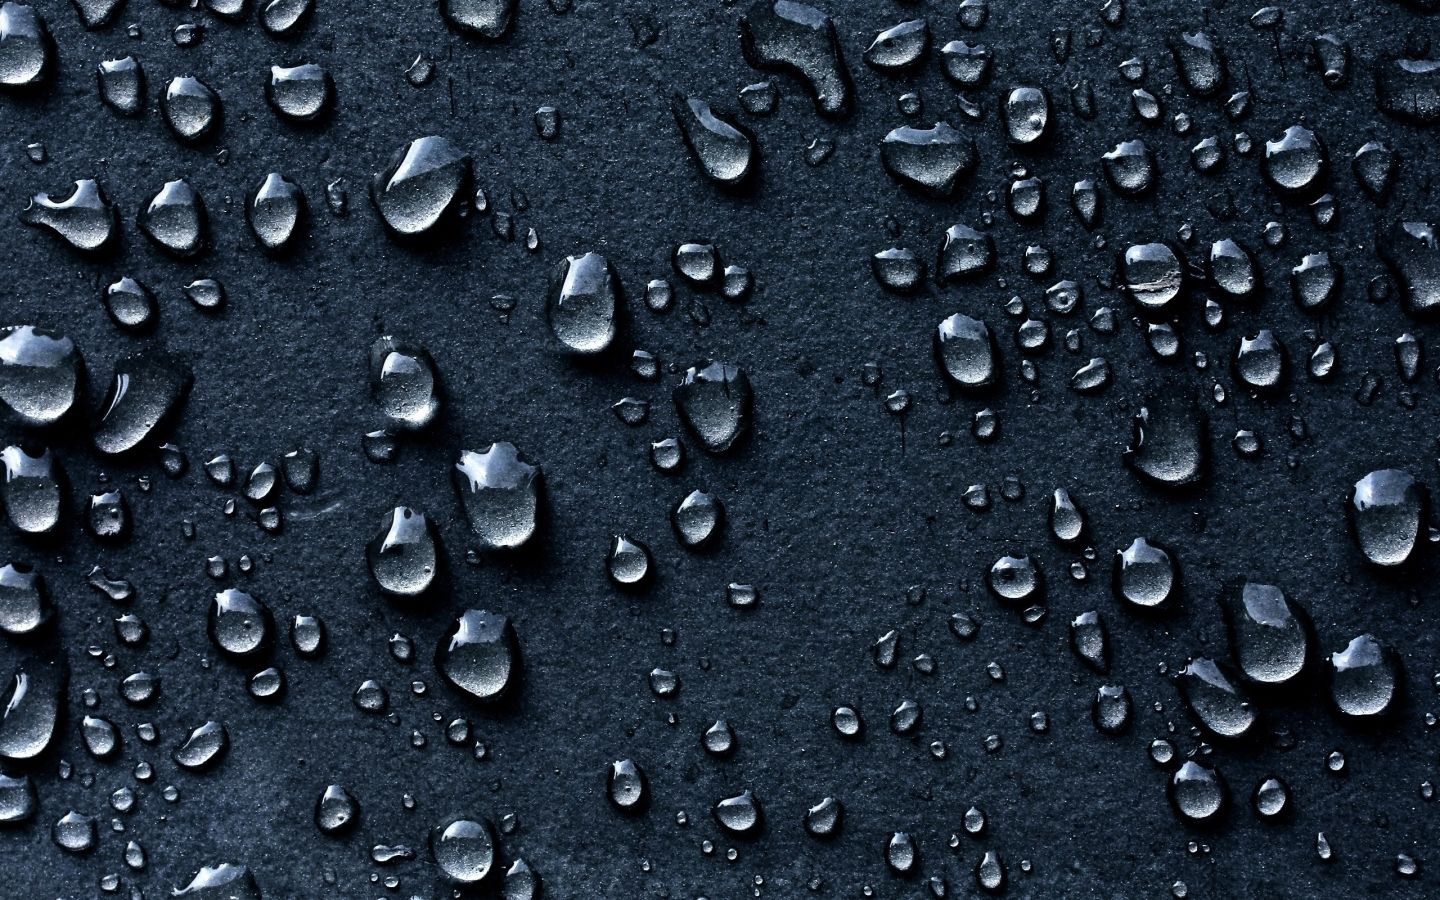 Water Drops Dark Background Mac Wallpaper Download Free Mac